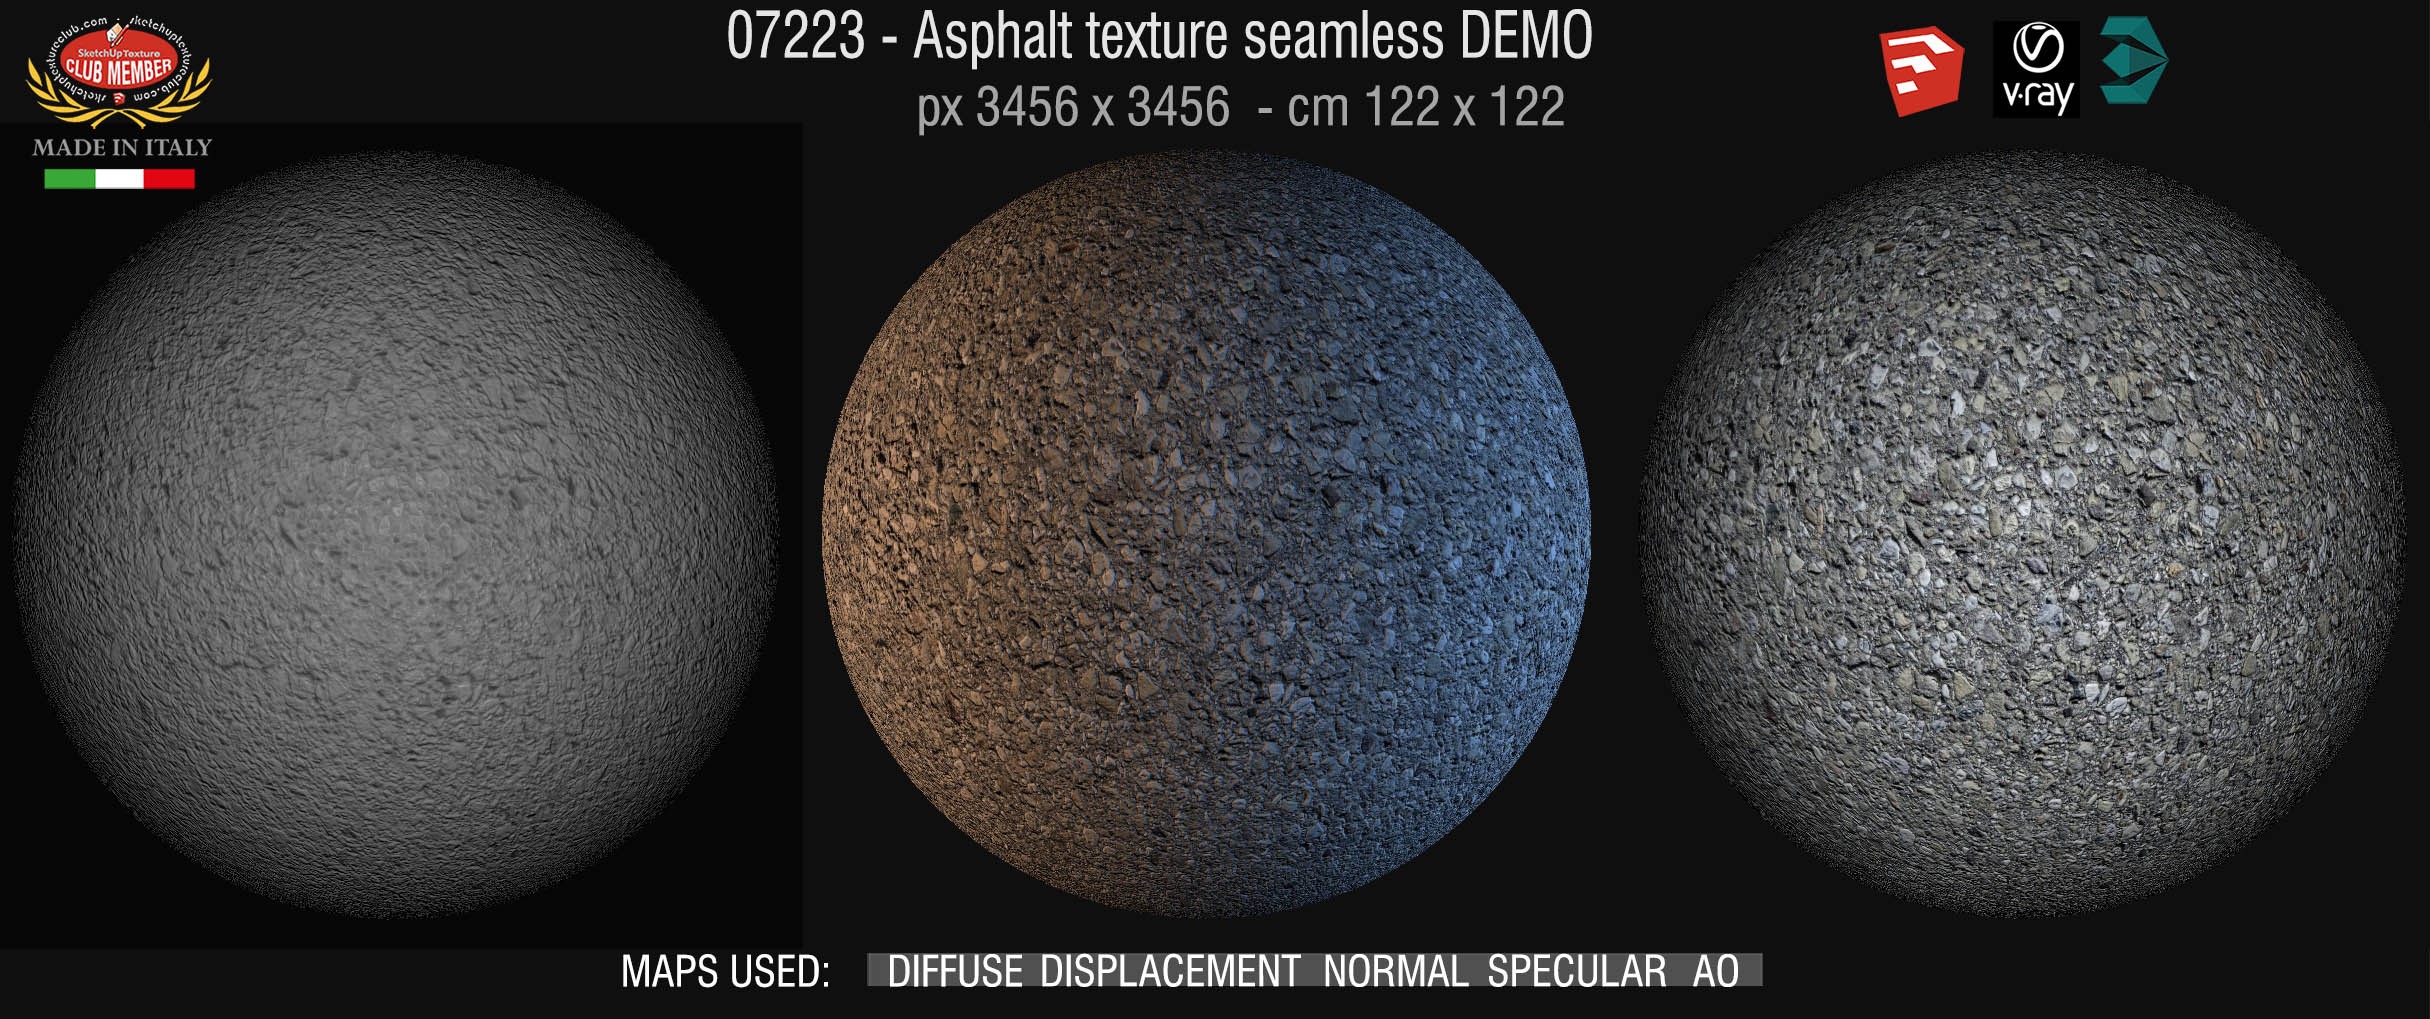 07223 Asphalt texture seamless + maps DEMO